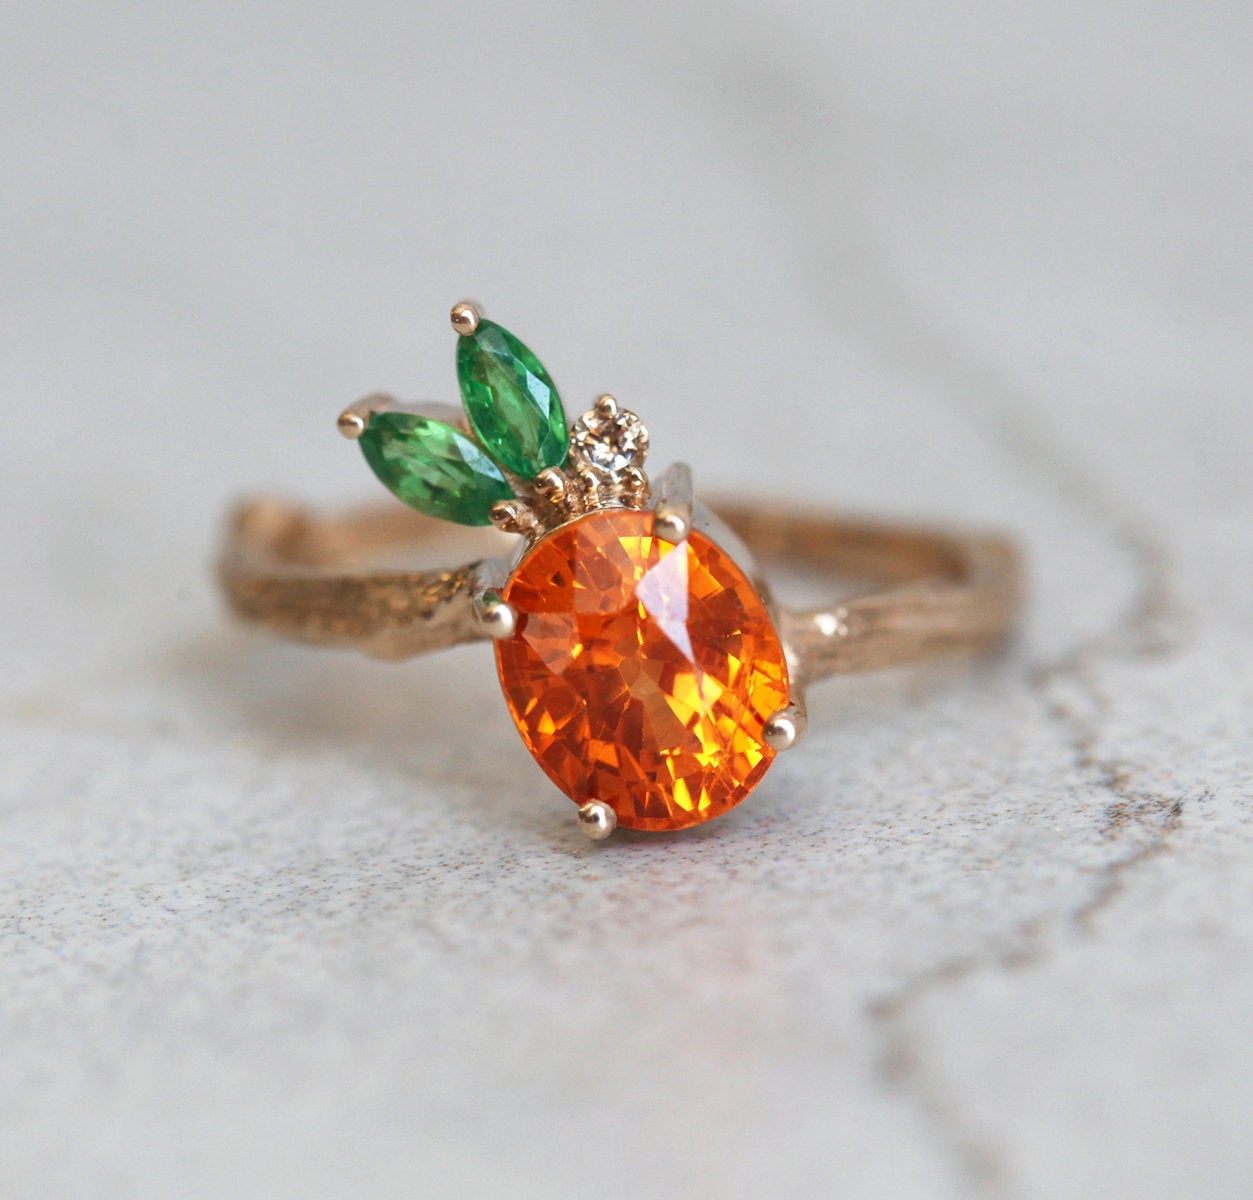 Orange Round Garnet Ring with Marquise Cut Tsavorite Gemstones and Champagne Diamonds Resembling  a Pineapple